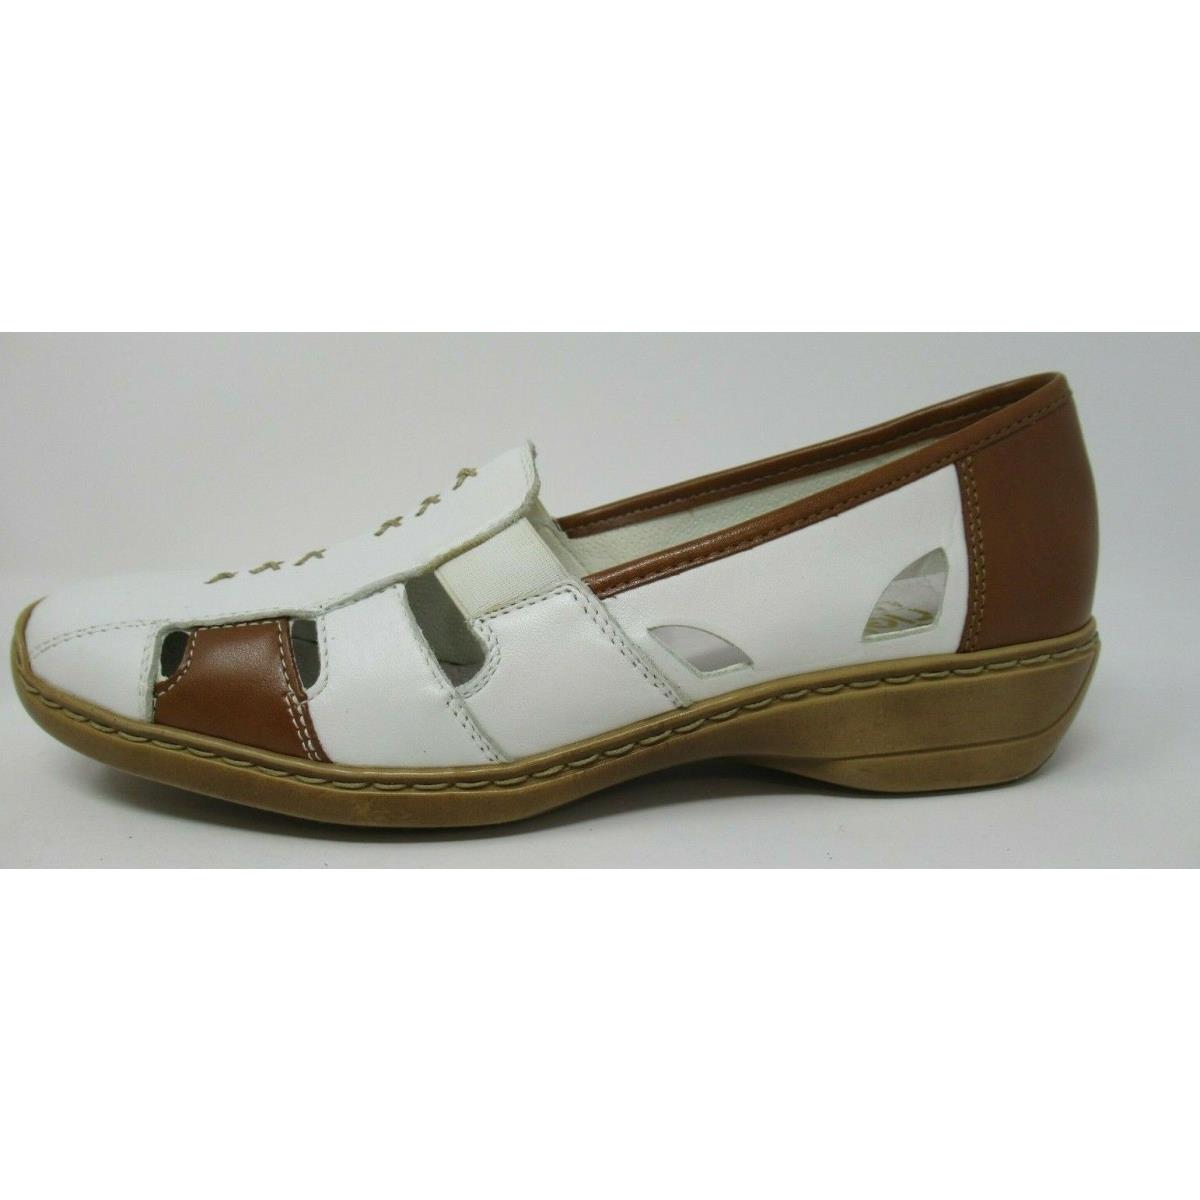 Rieker Women`s 41385 White Combi Lea. Slip-on Summer Loafers Shoes Sz: 37 US 6